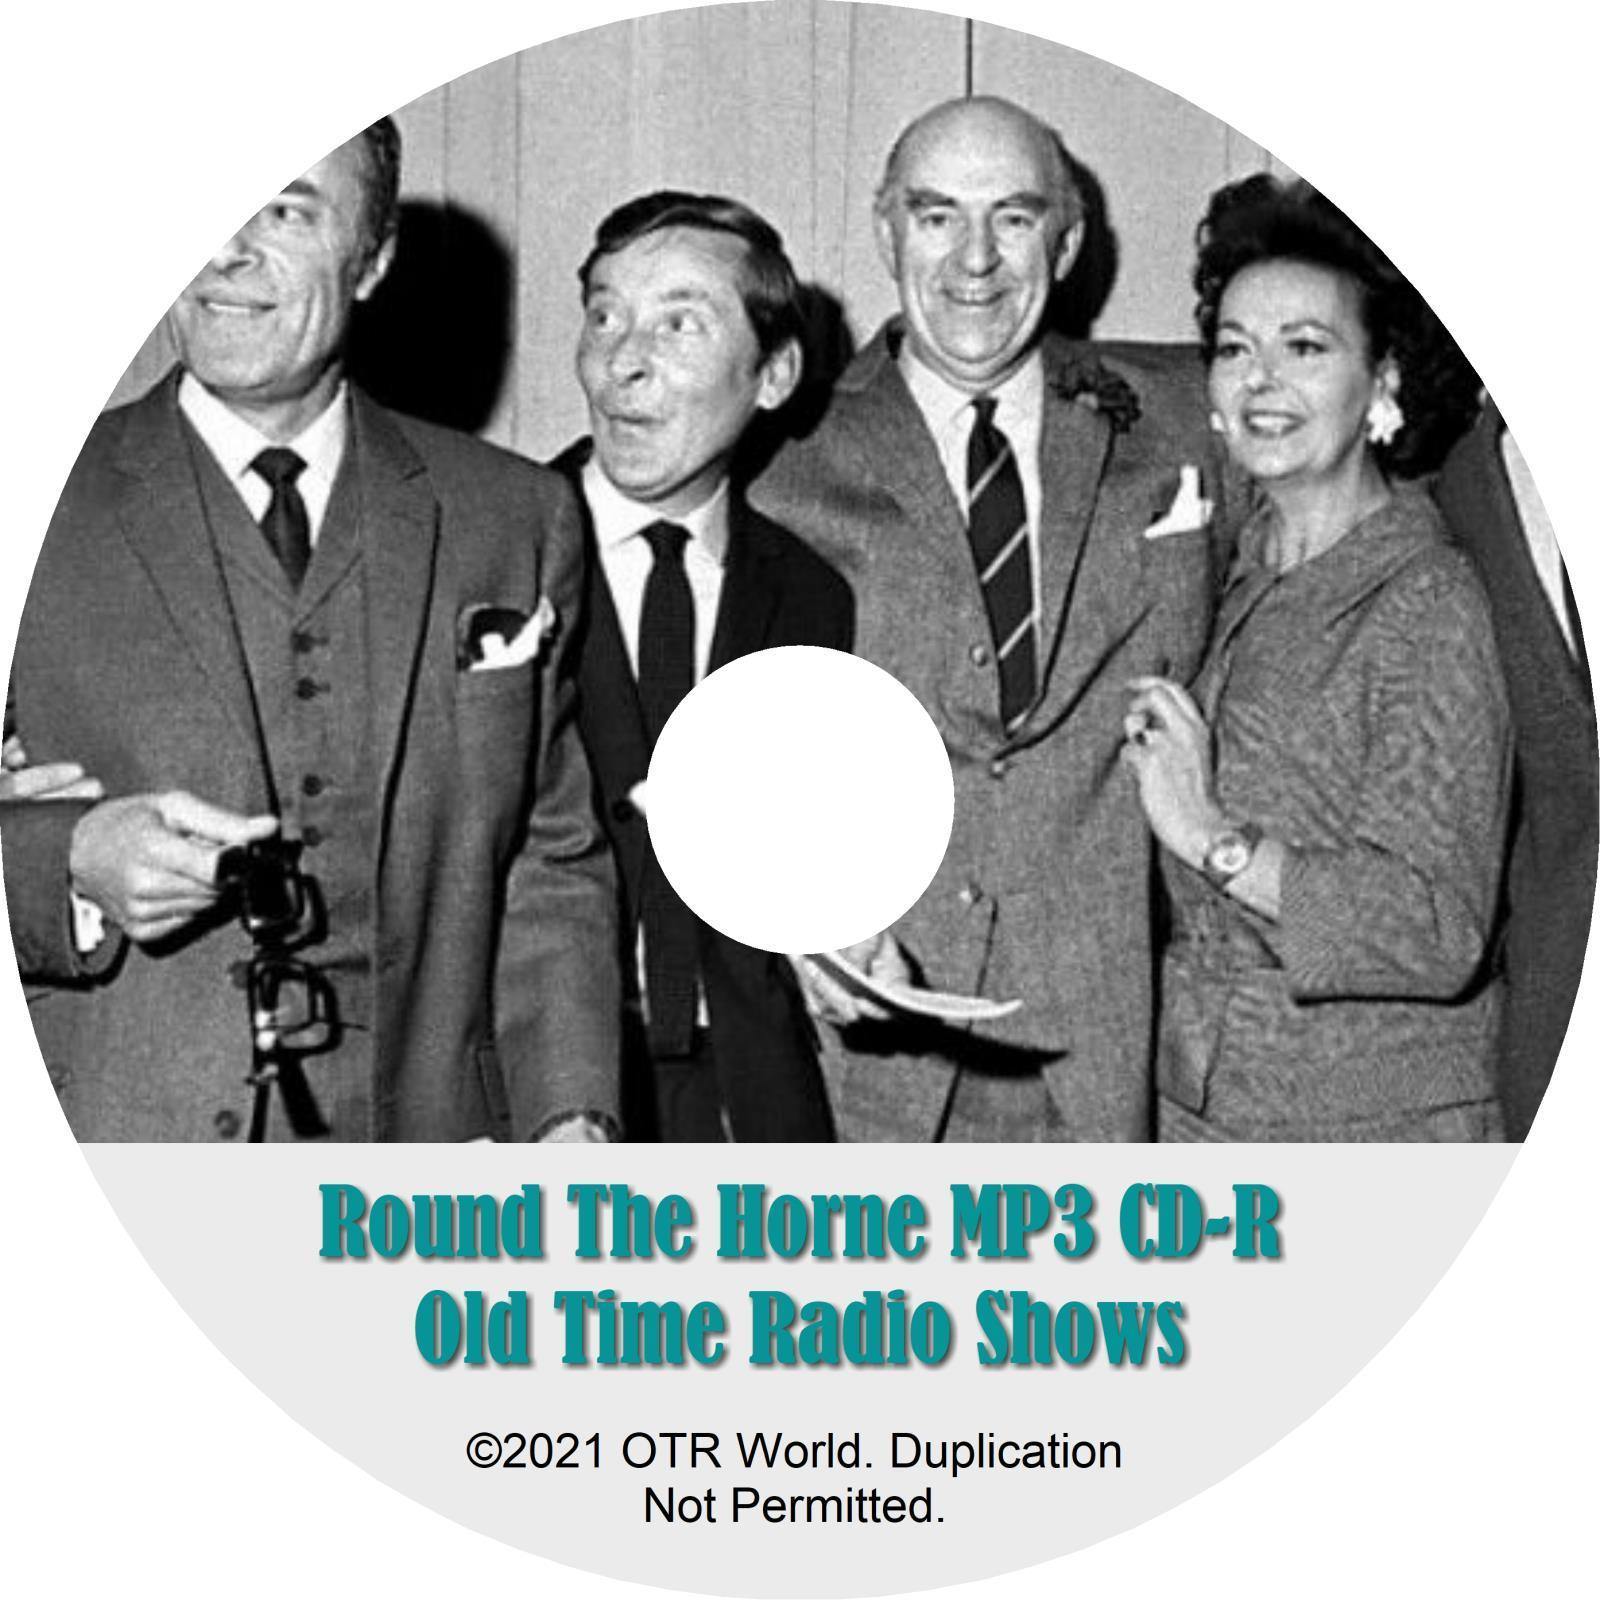 Round The Horne OTR OTRS Old Time Radio Shows MP3 On CD-R 69 Episodes BBC - OTR World